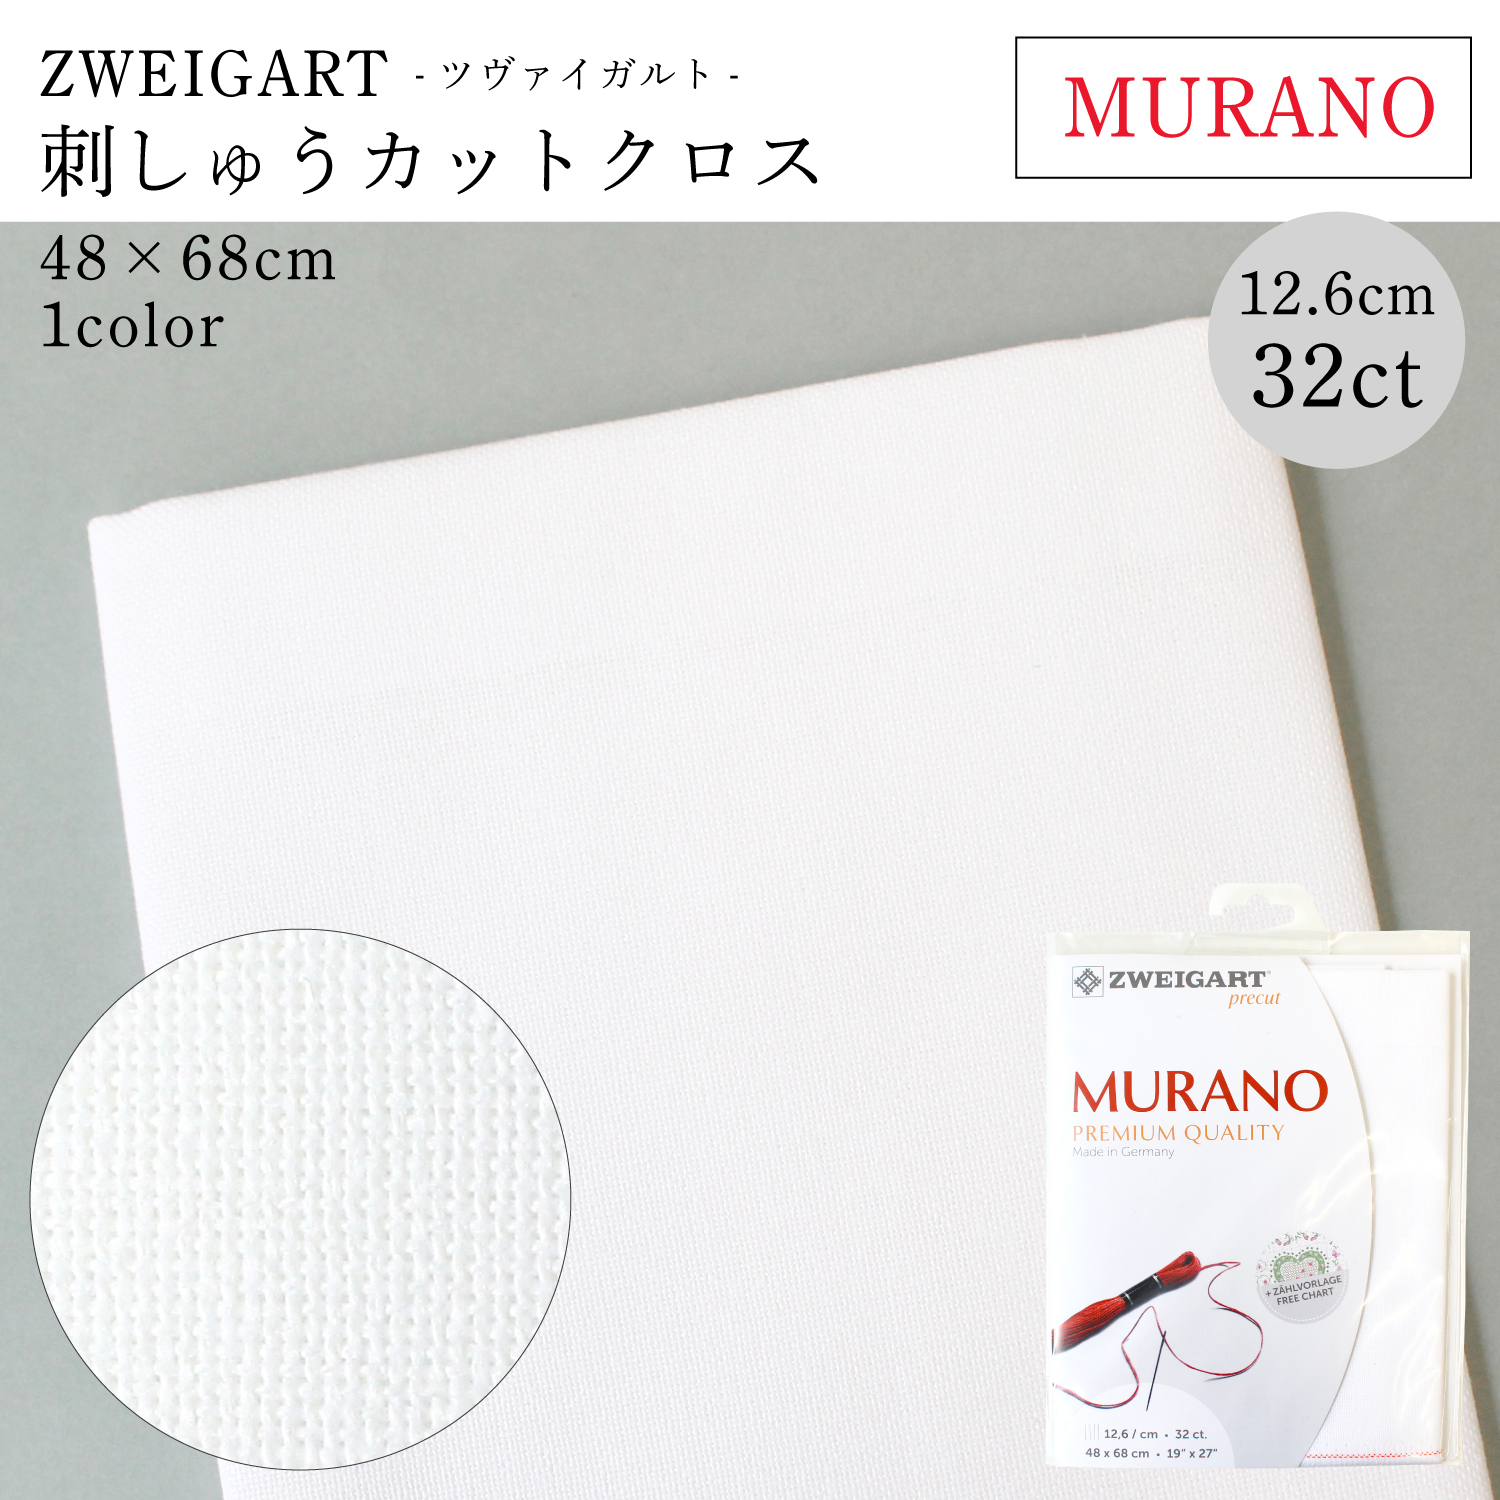 ZW3984P TWEIGART Embroidery Cloth 32CT MURANO 48x68cm (bag)